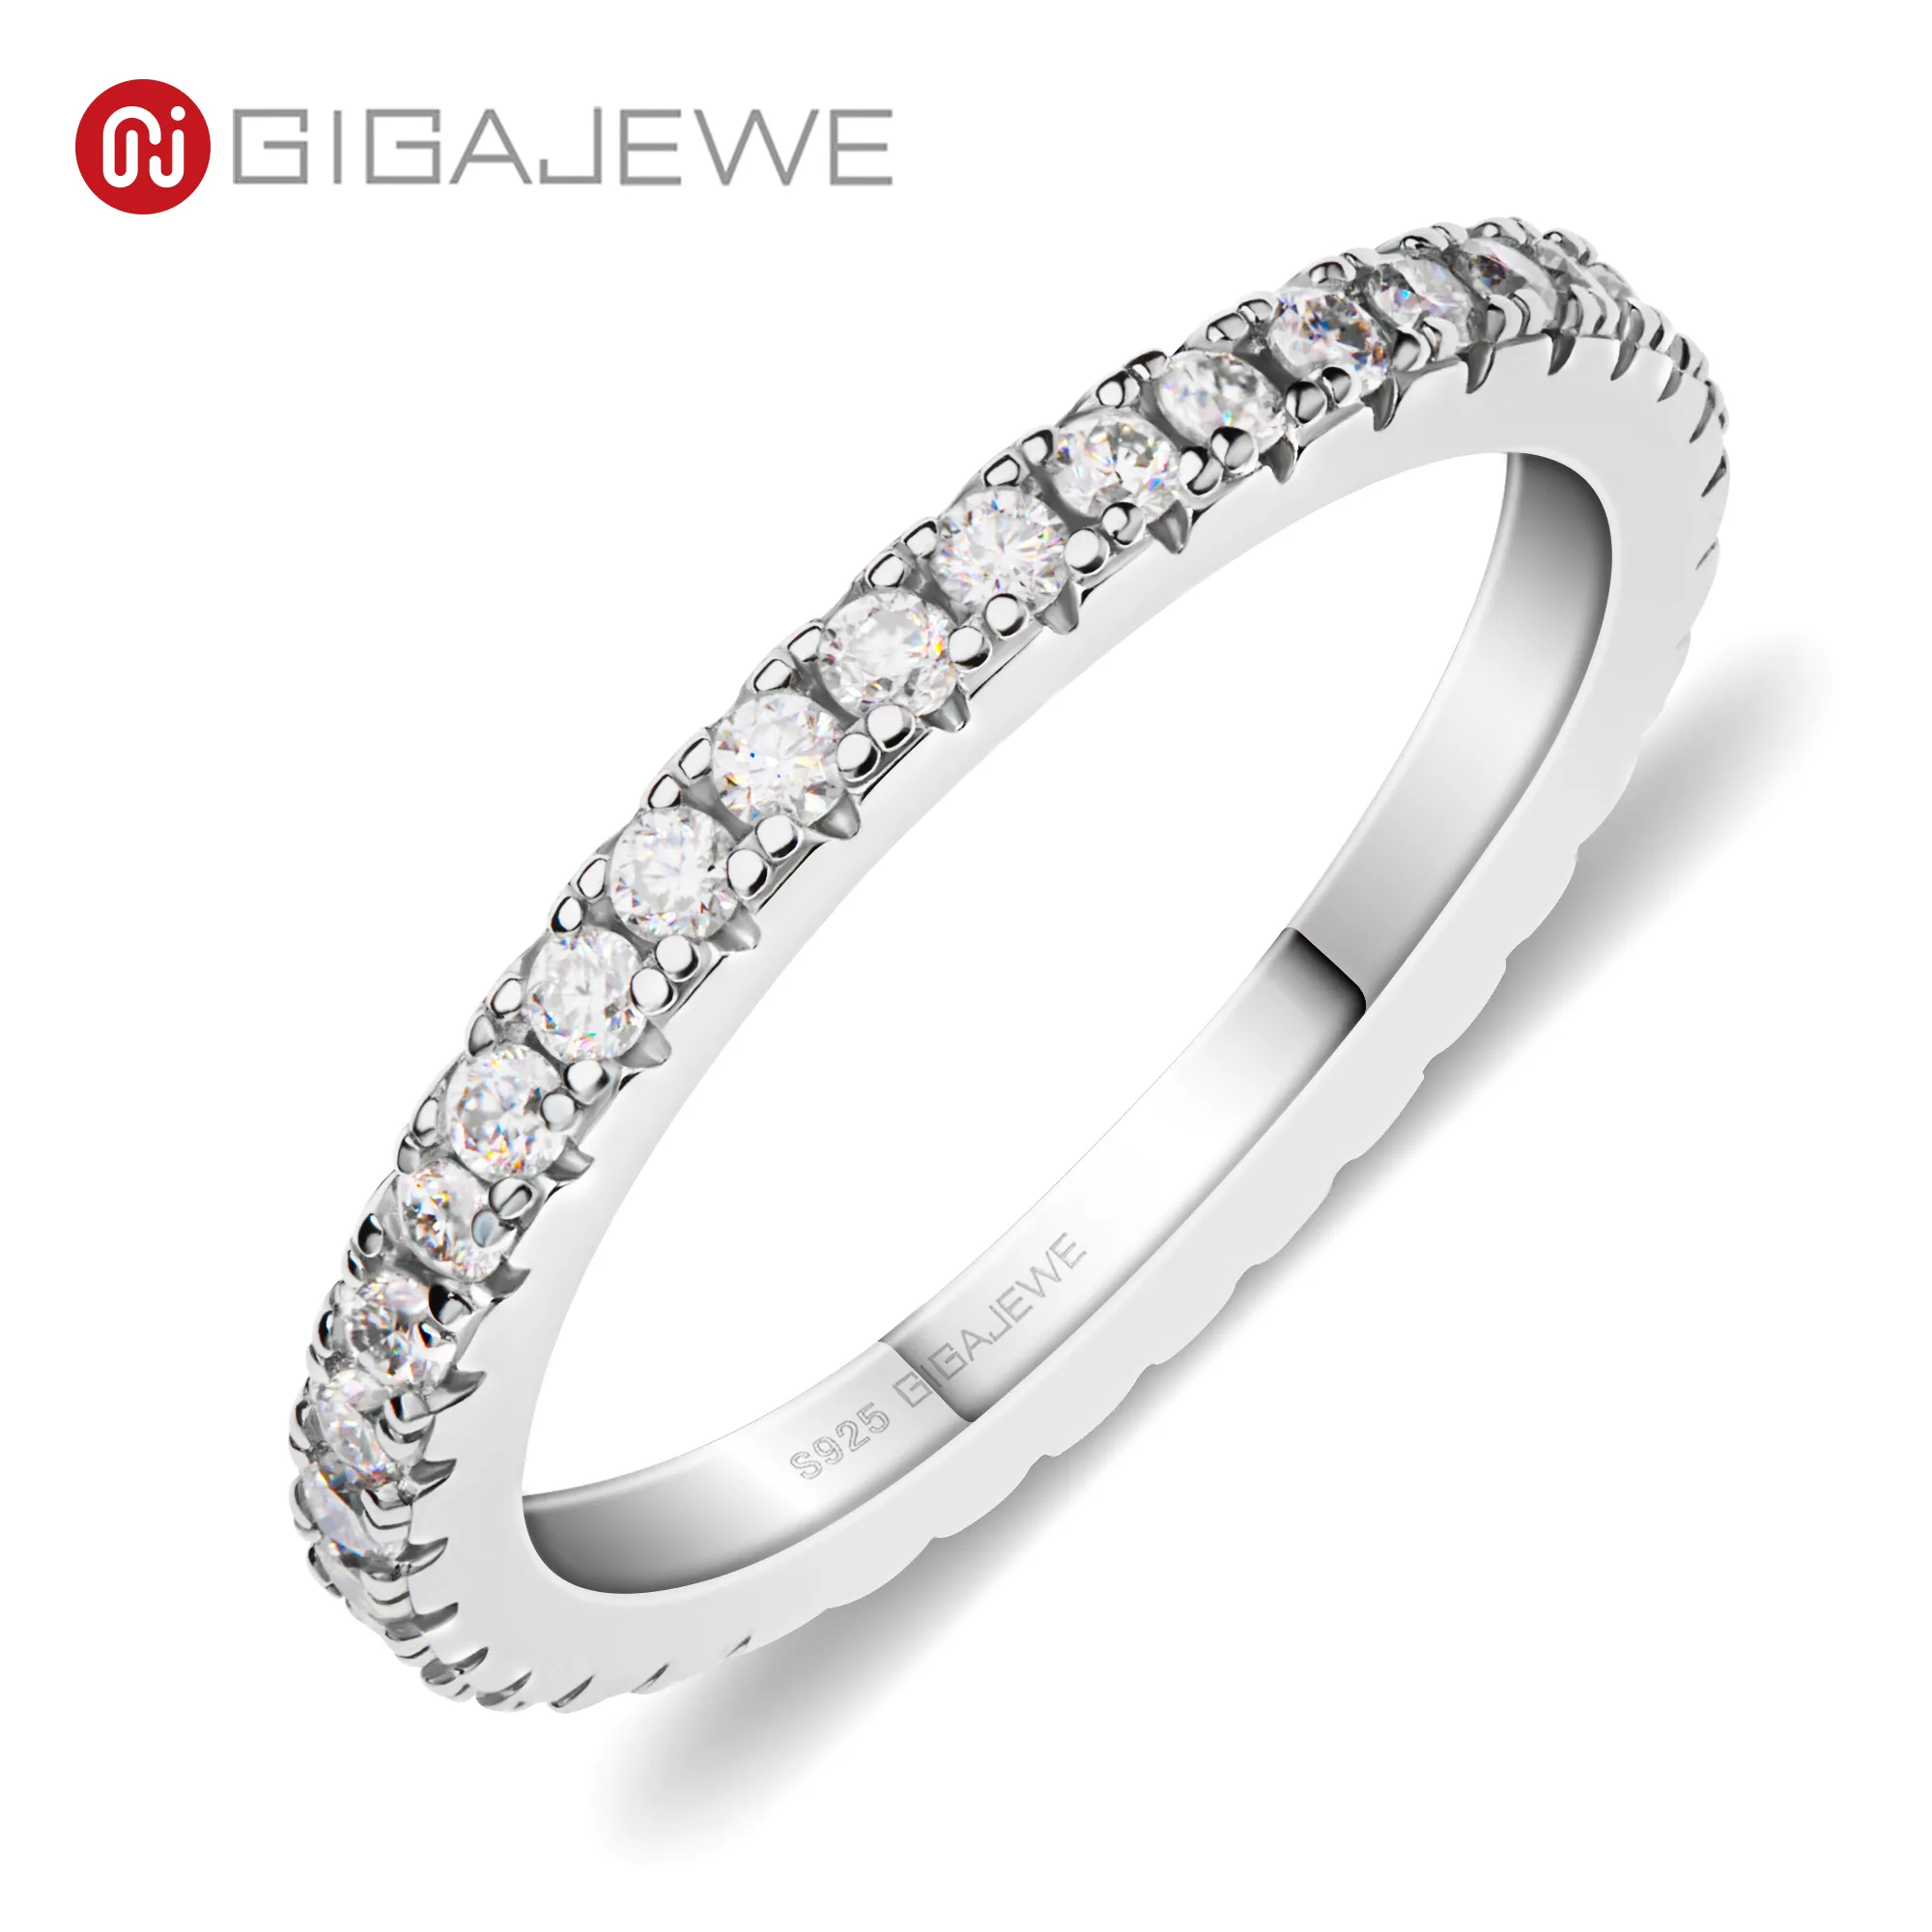 GIGAJEWE Weihnachtsgeschenk Moissanit 1,5 mm Rundschliff Ringe Weiß D VVS1 925 Silber Full Enternity Ring Diamant GMSR-007